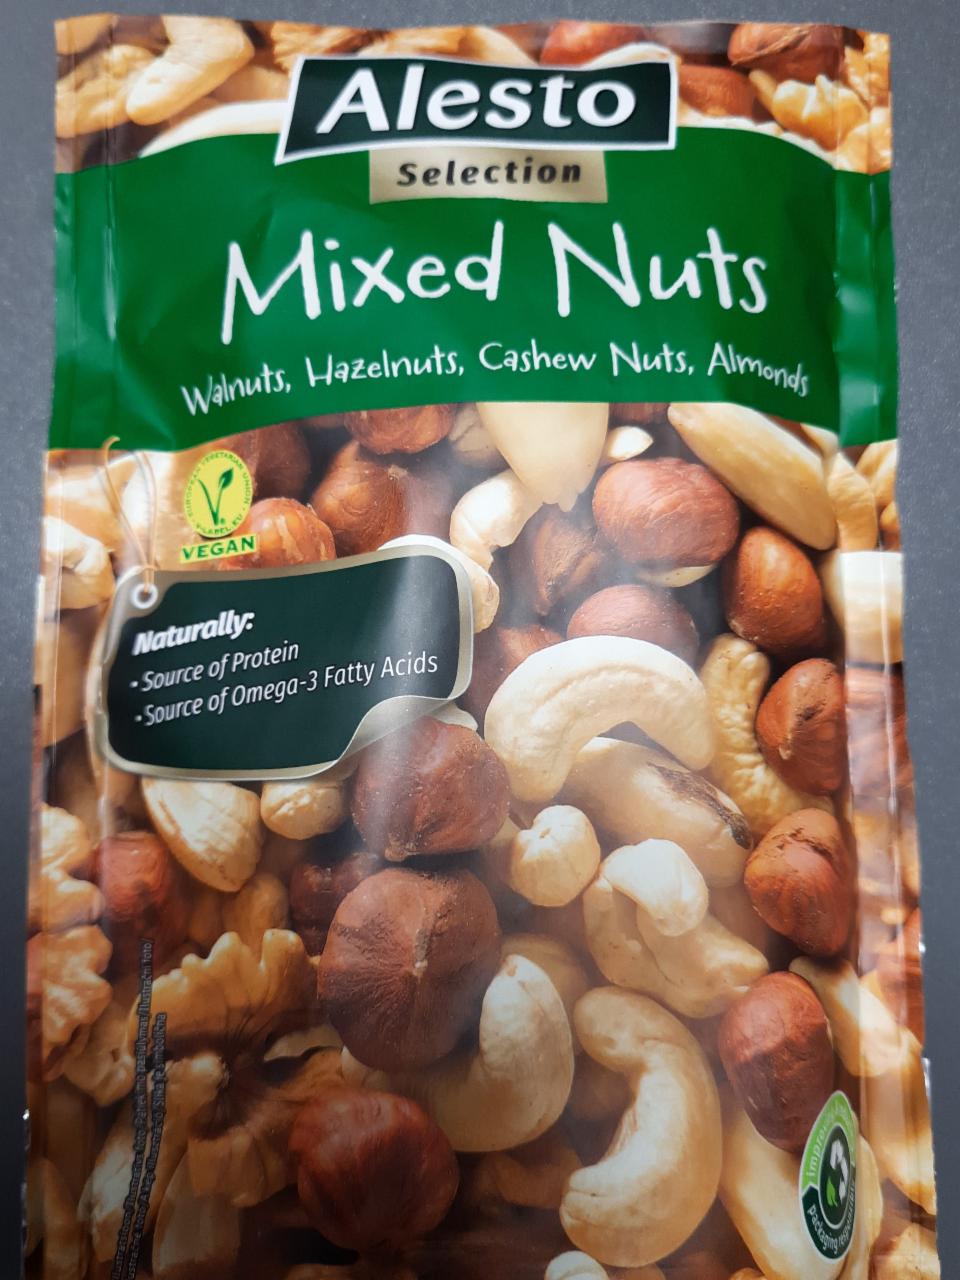 Photo - Mixed nuts (walnuts, hazelnuts, cashew nuts, almonds) Alesto